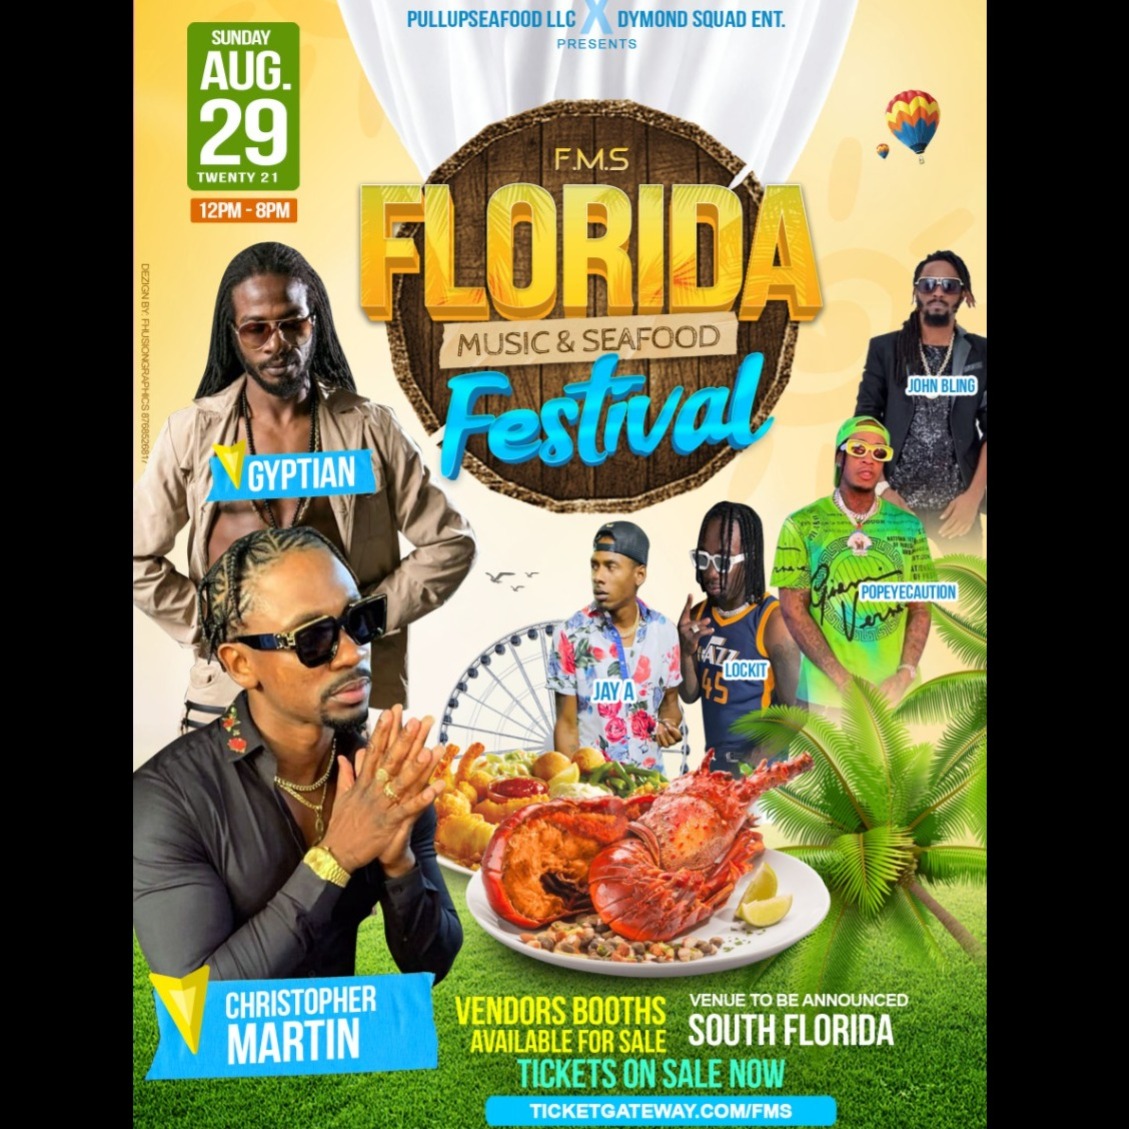 FMSF - FLORIDA MUSIC & SEAFOOD FESTIVAL